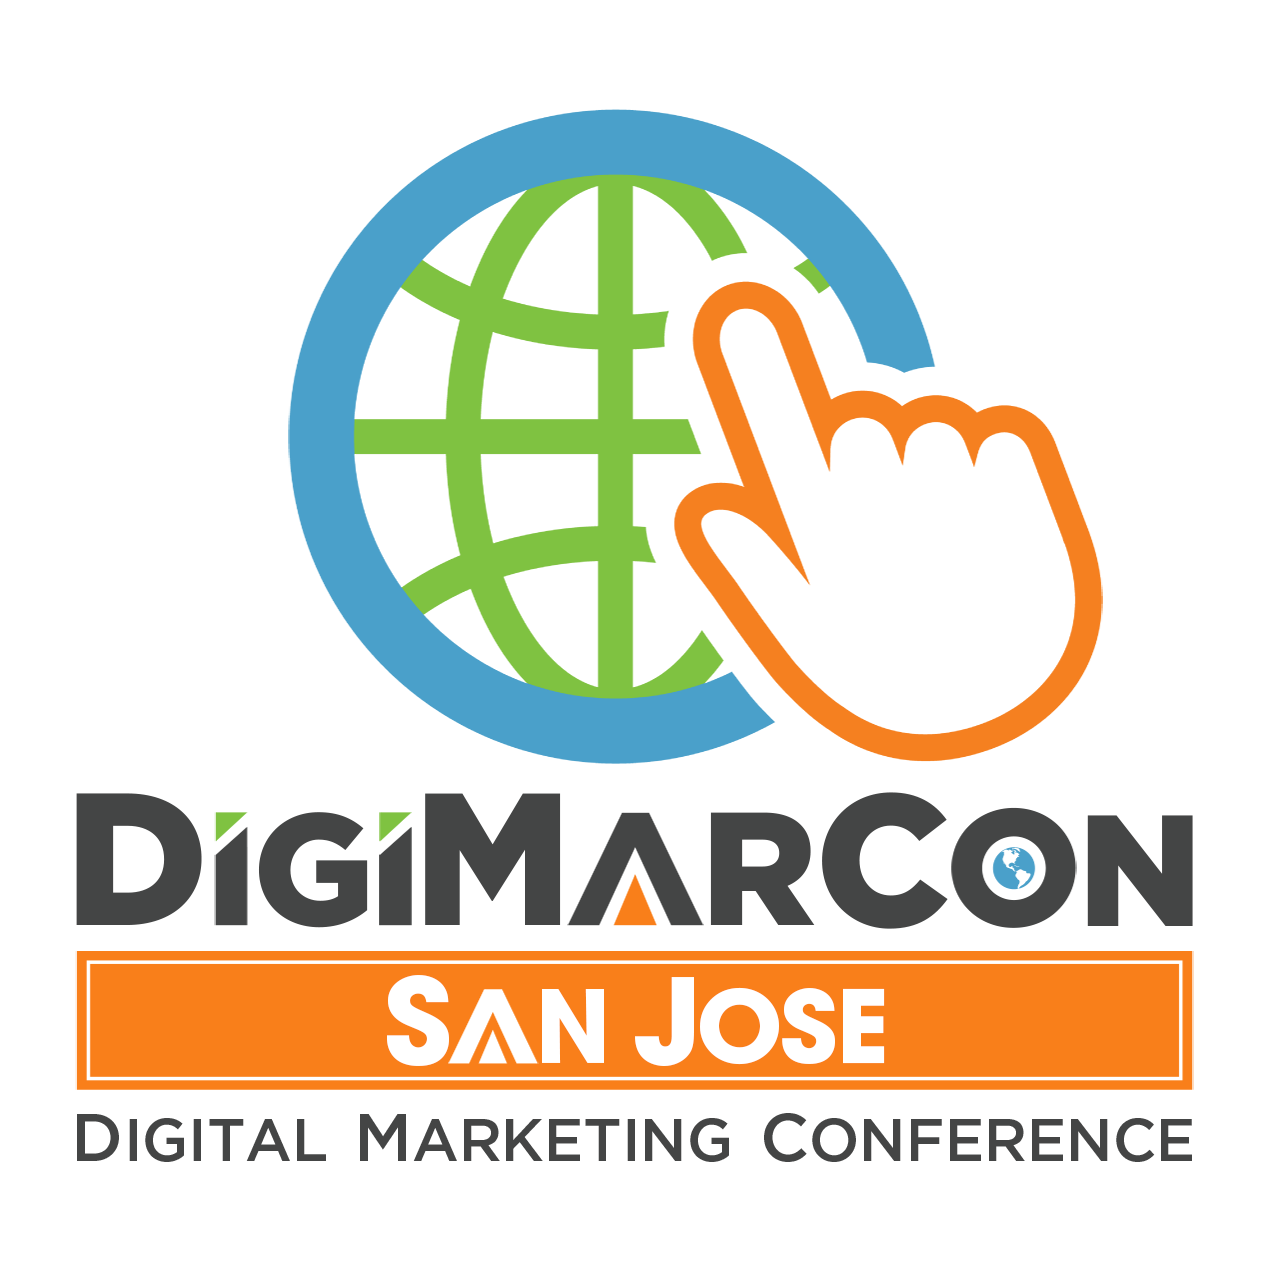 San Jose Digital Marketing, Media & Advertising Conference